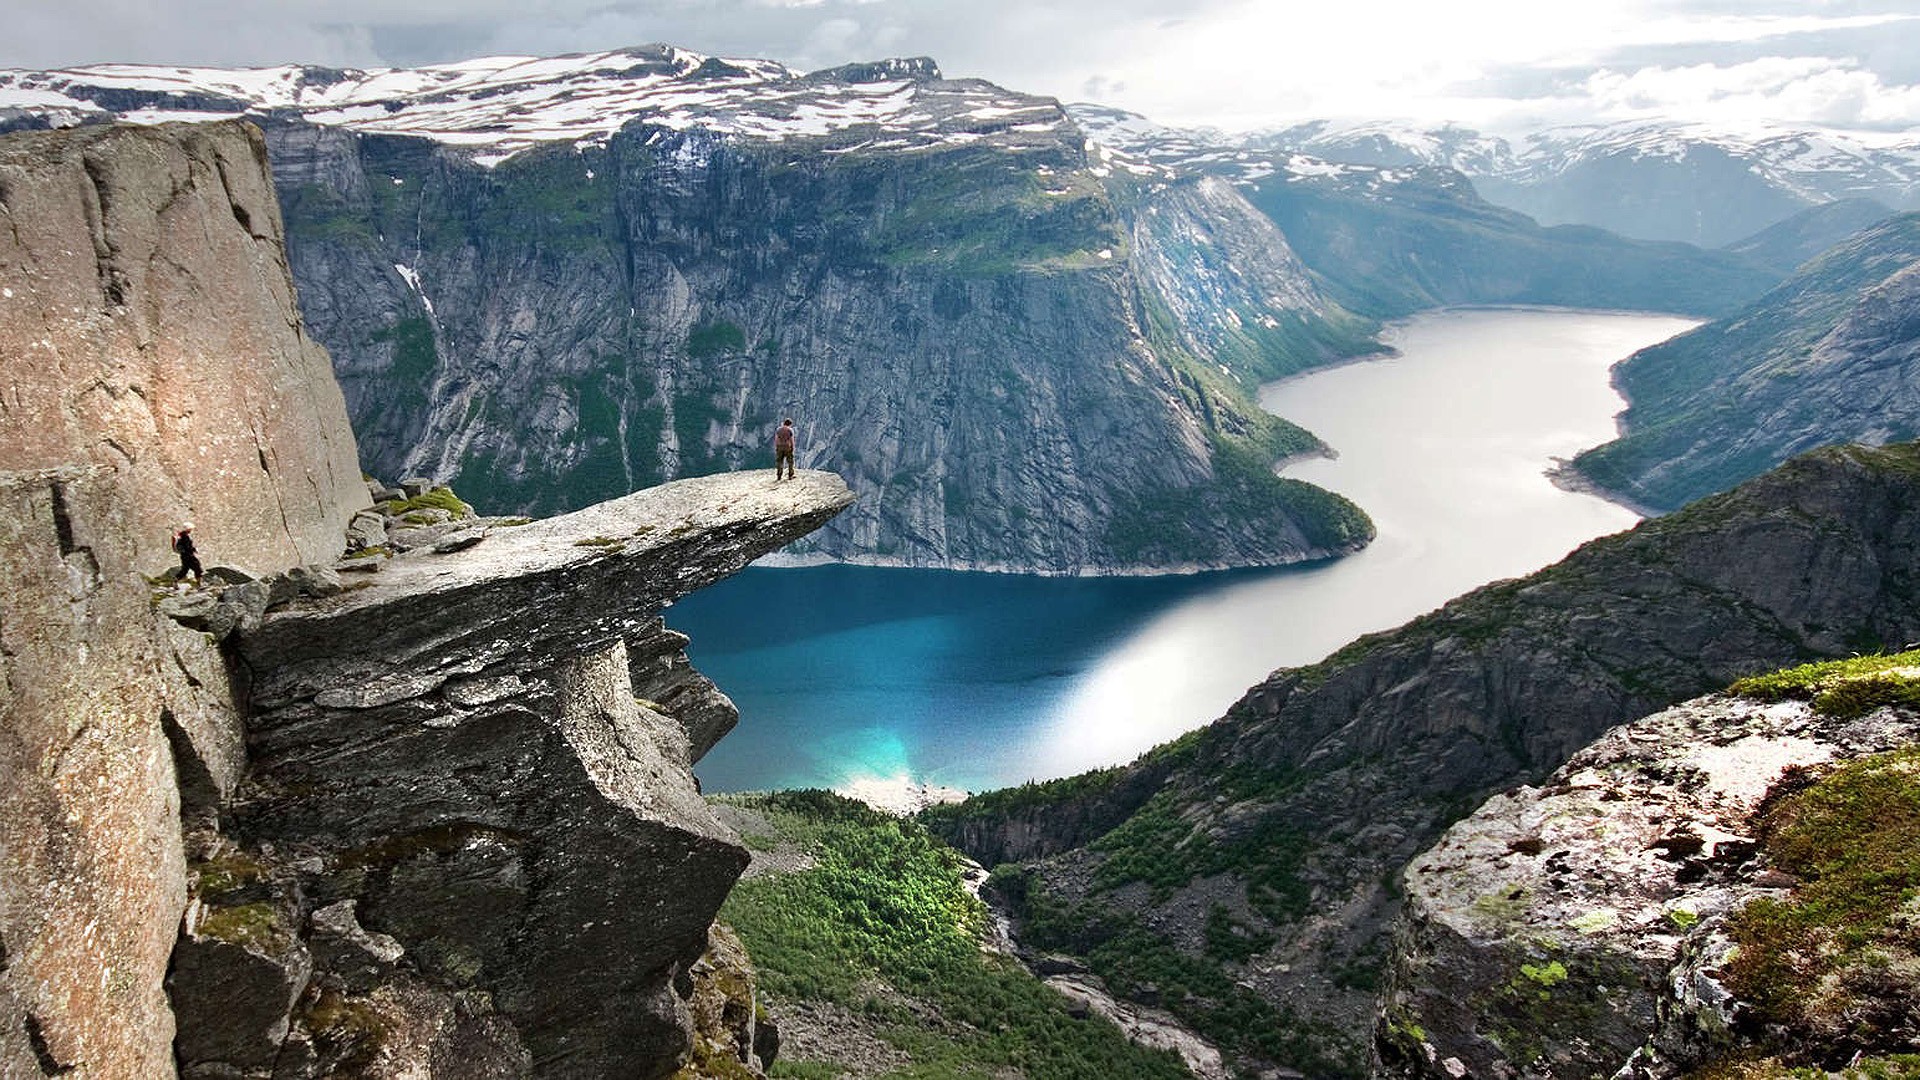 General 1920x1080 Trolltunga Norway landscape rocks cliff lake gorge nordic landscapes